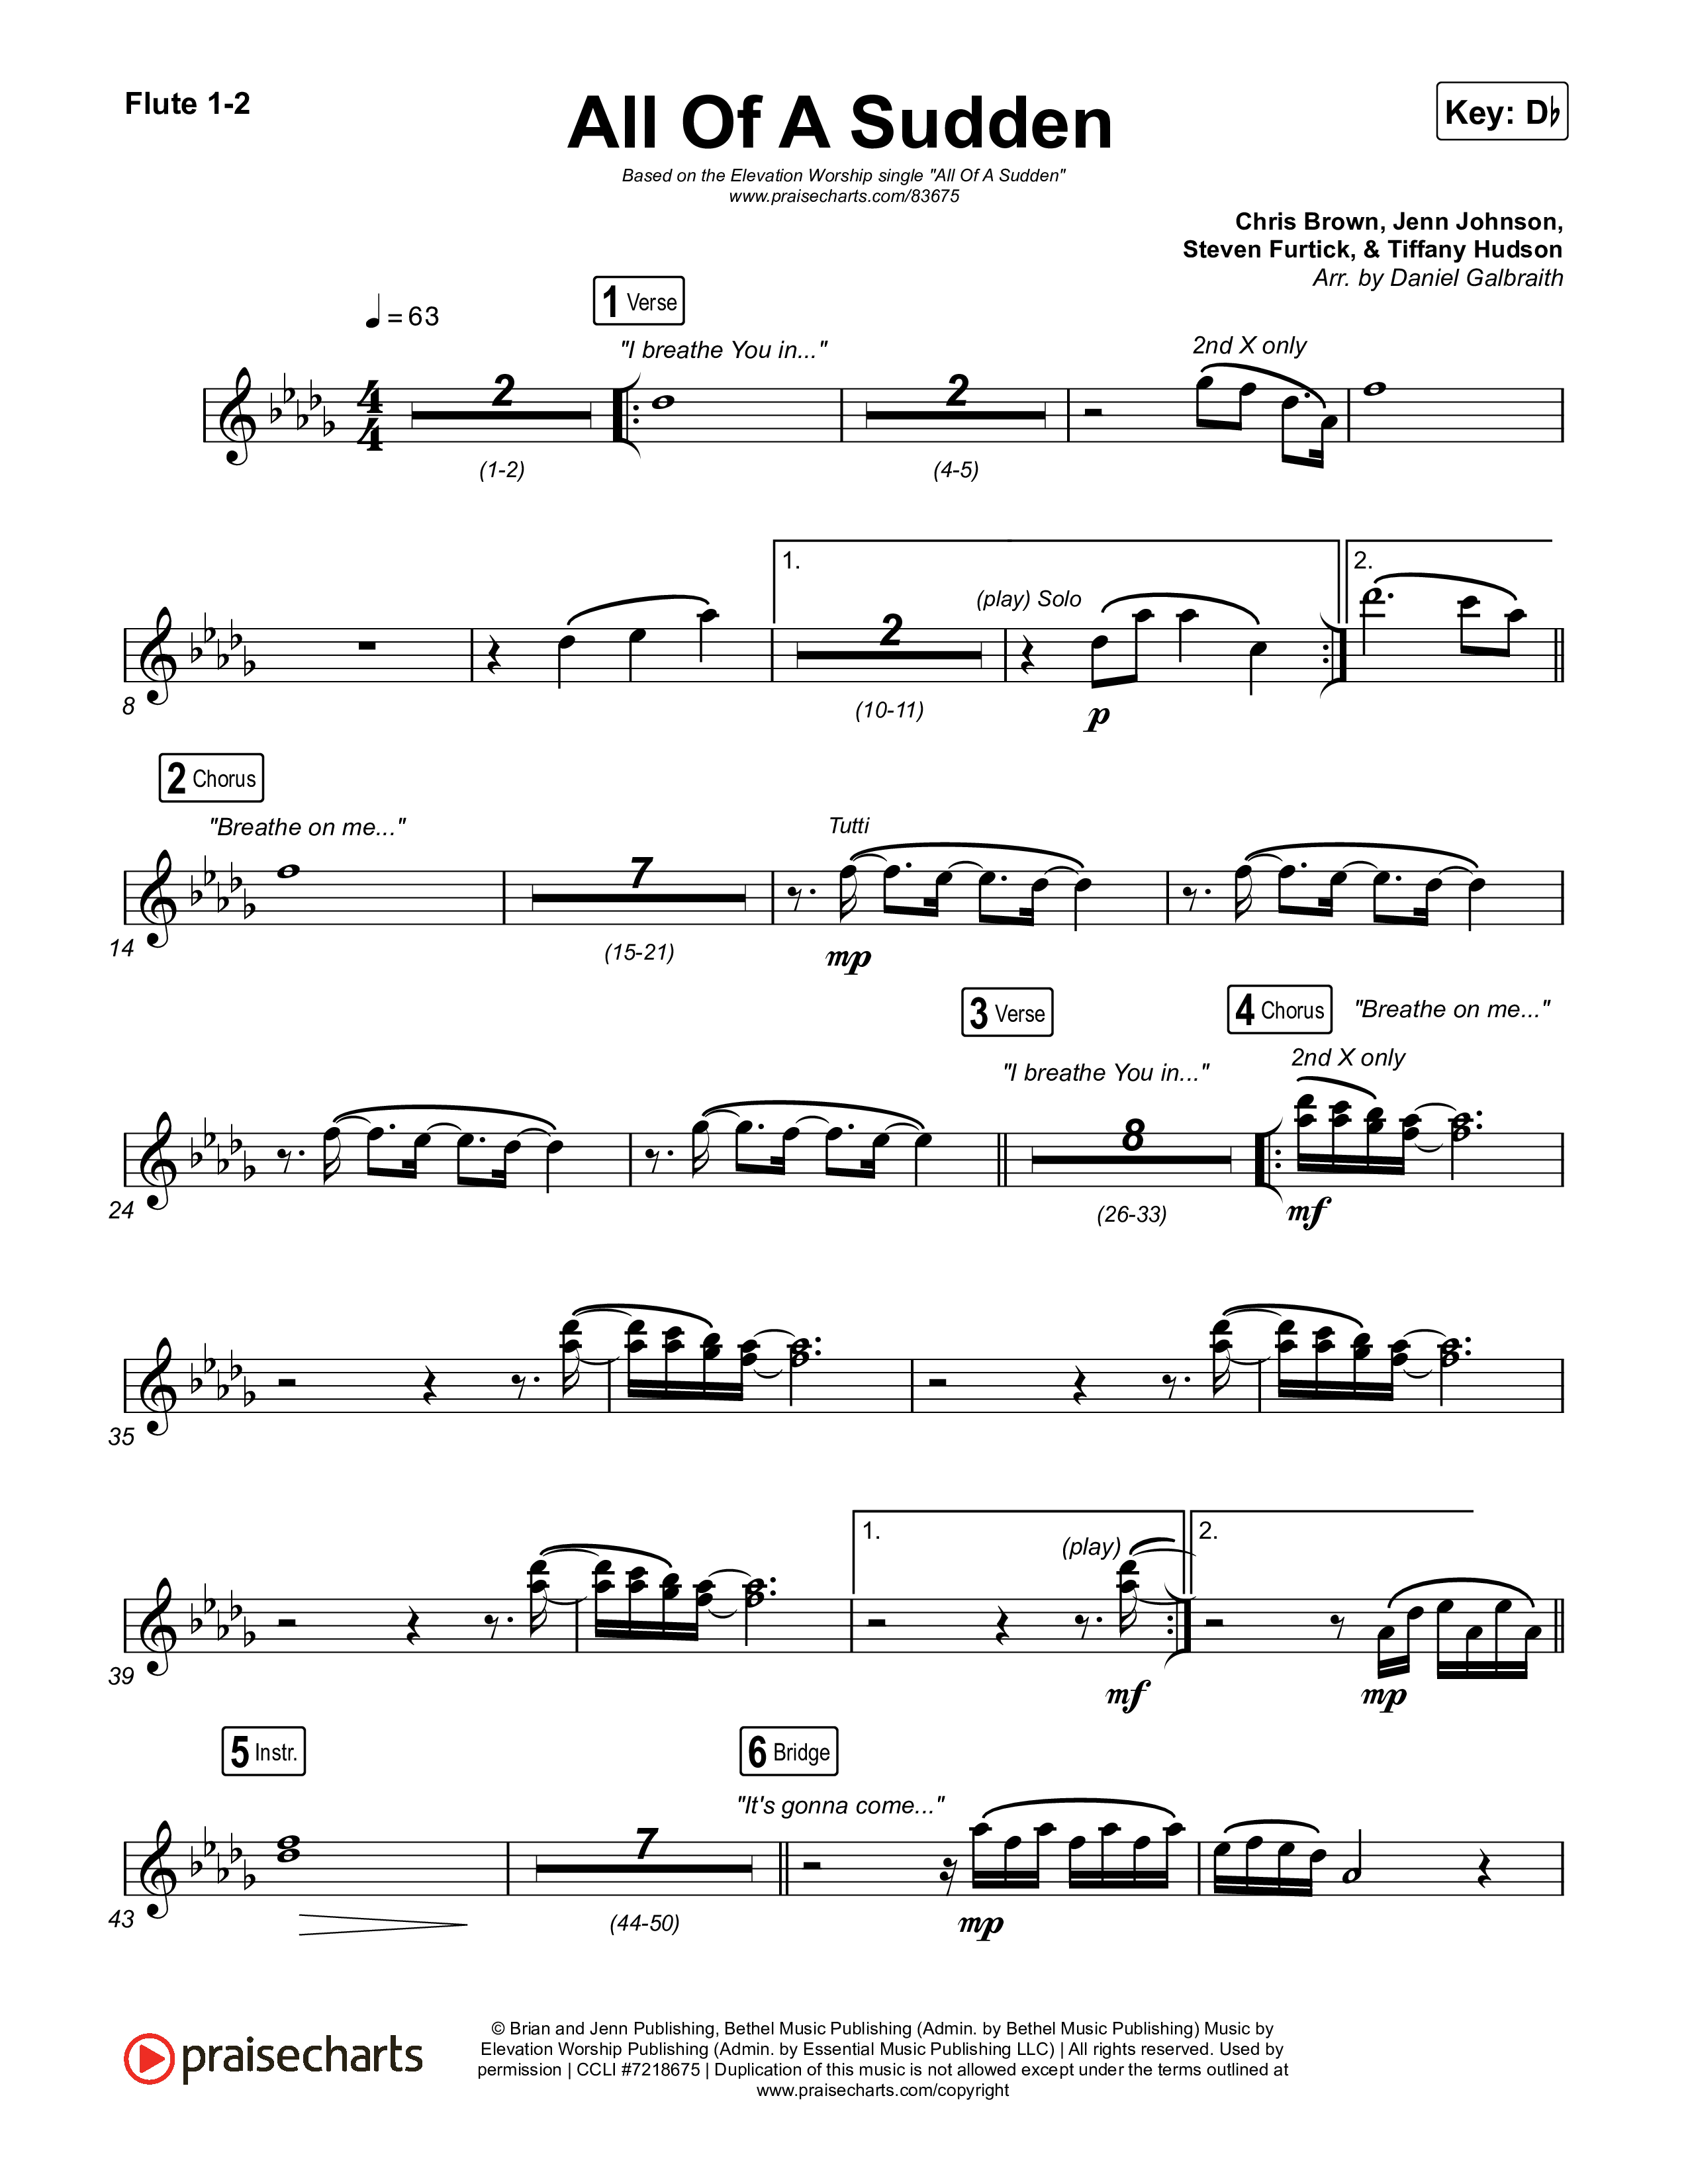 All Of A Sudden Flute 1,2 (Elevation Worship / Tiffany Hudson)